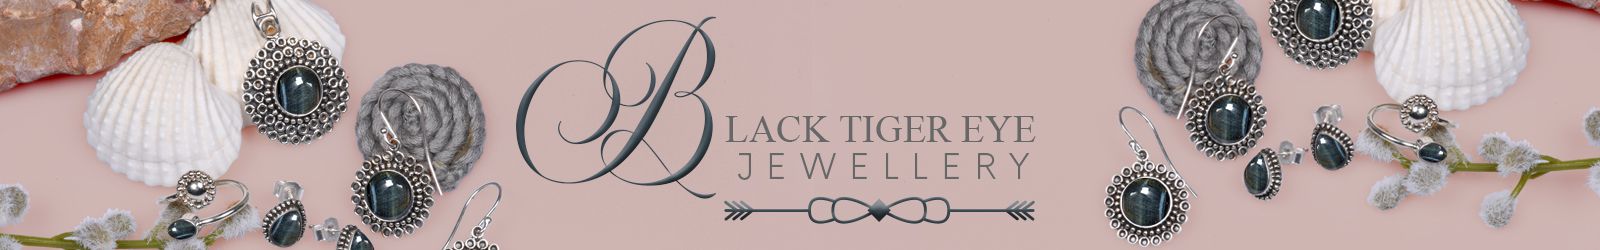 Silver Black Tiger Eye Jewelry Wholesale Supplier